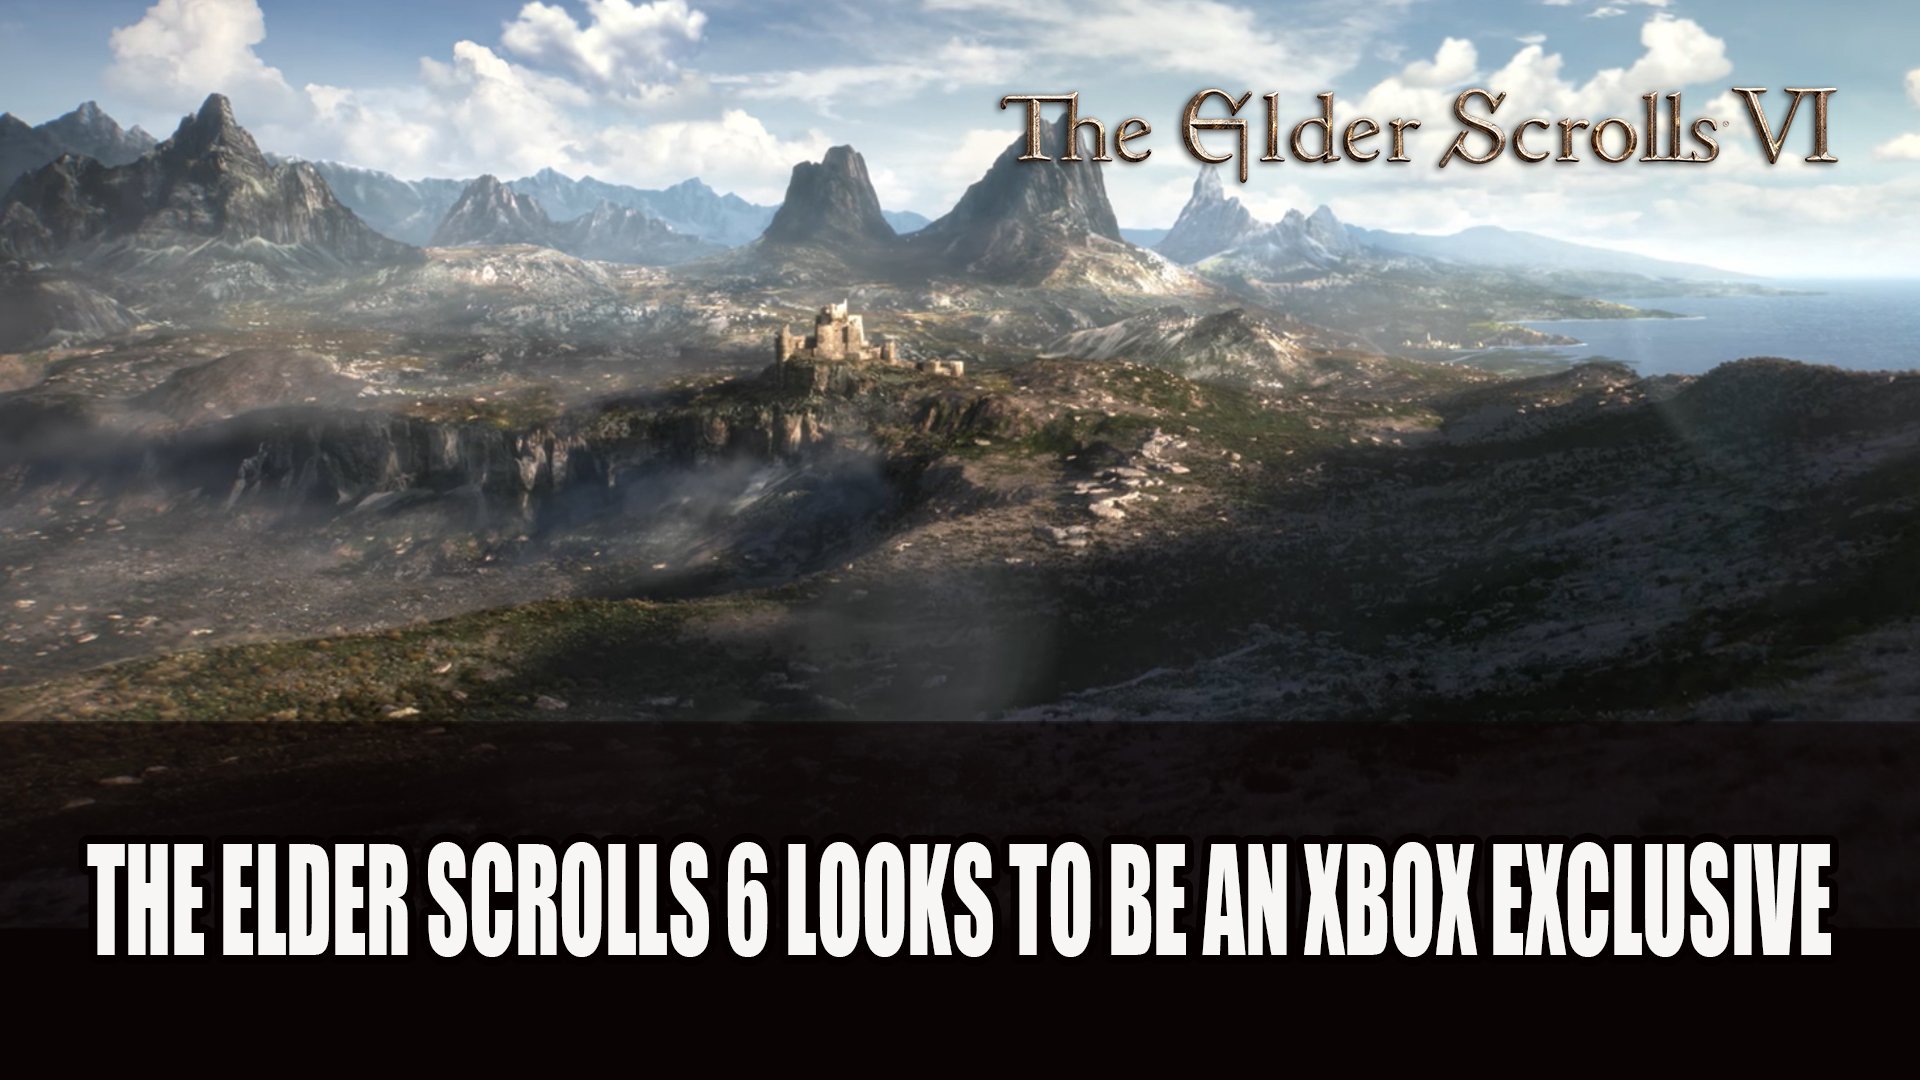 The Elder Scrolls 6 has entered development, Bethesda confirms